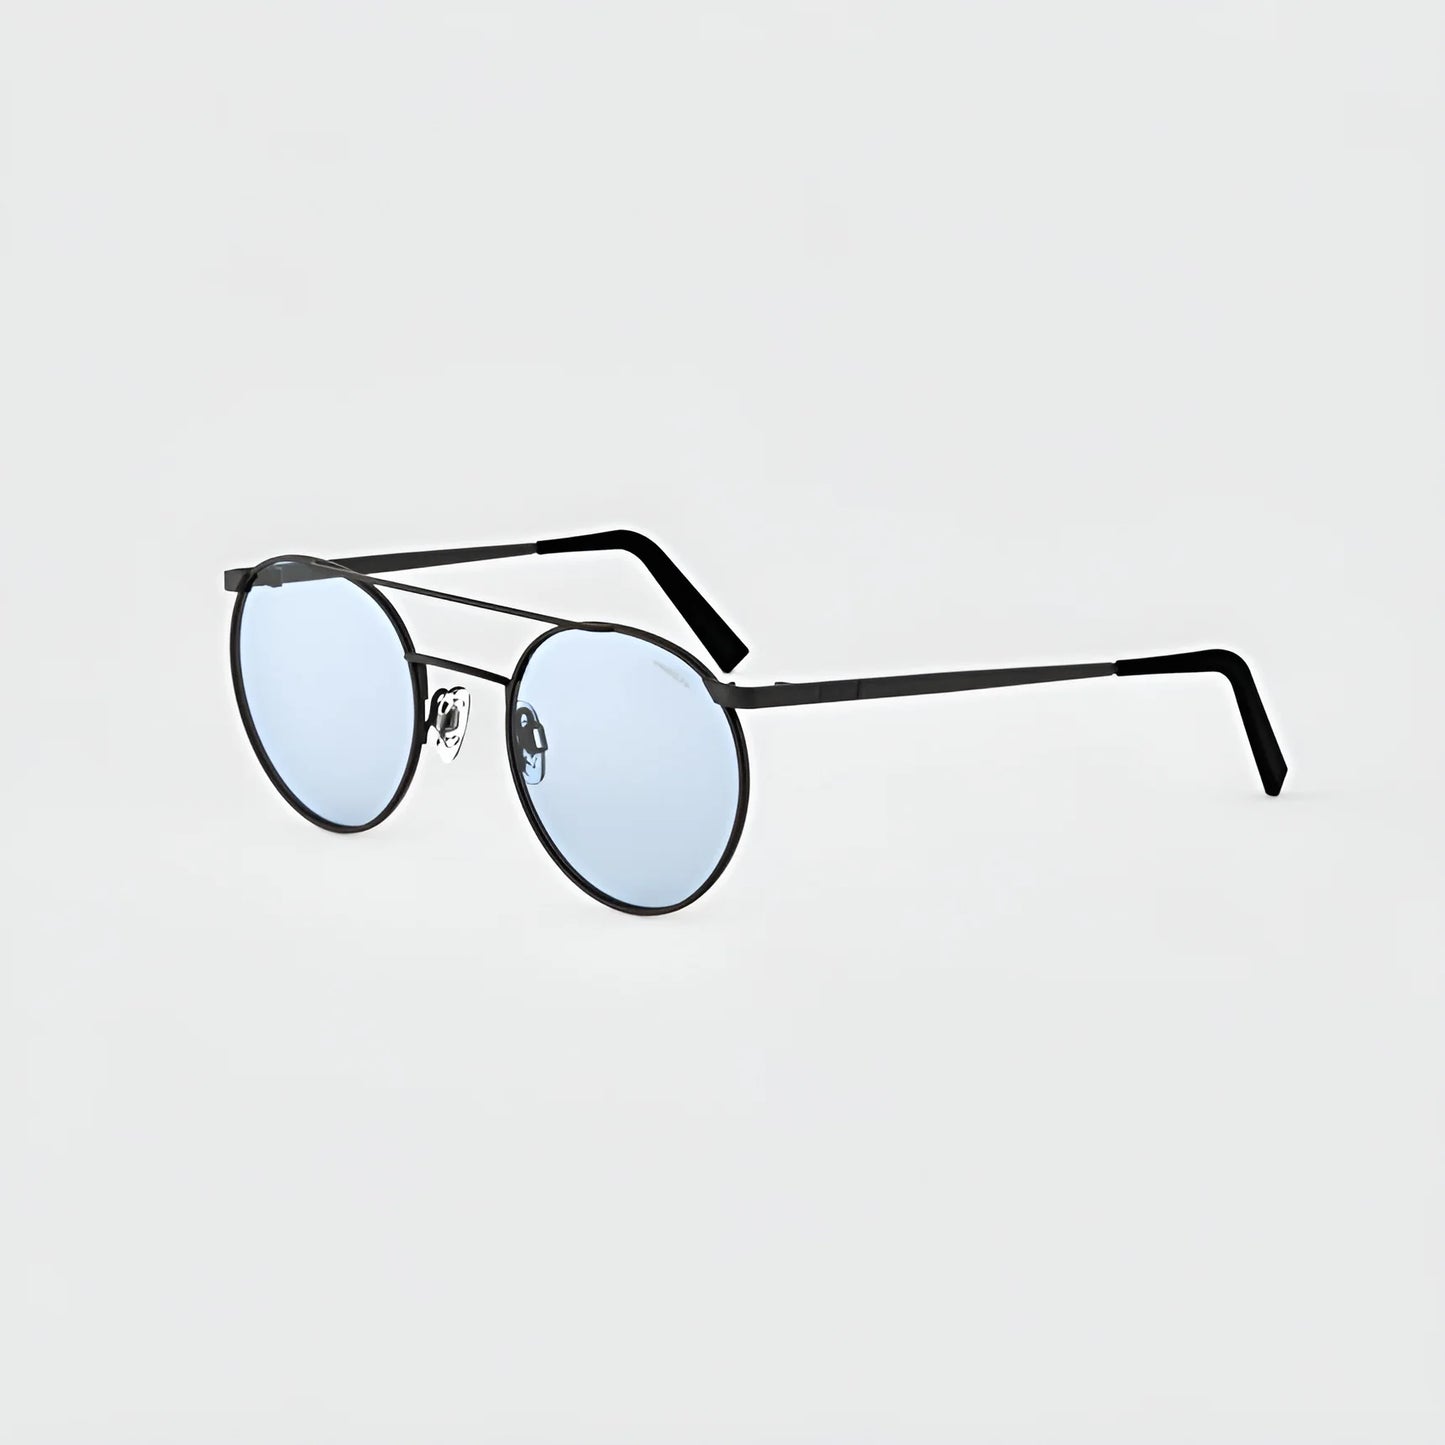 Randolph P3 Shadow Sunglasses